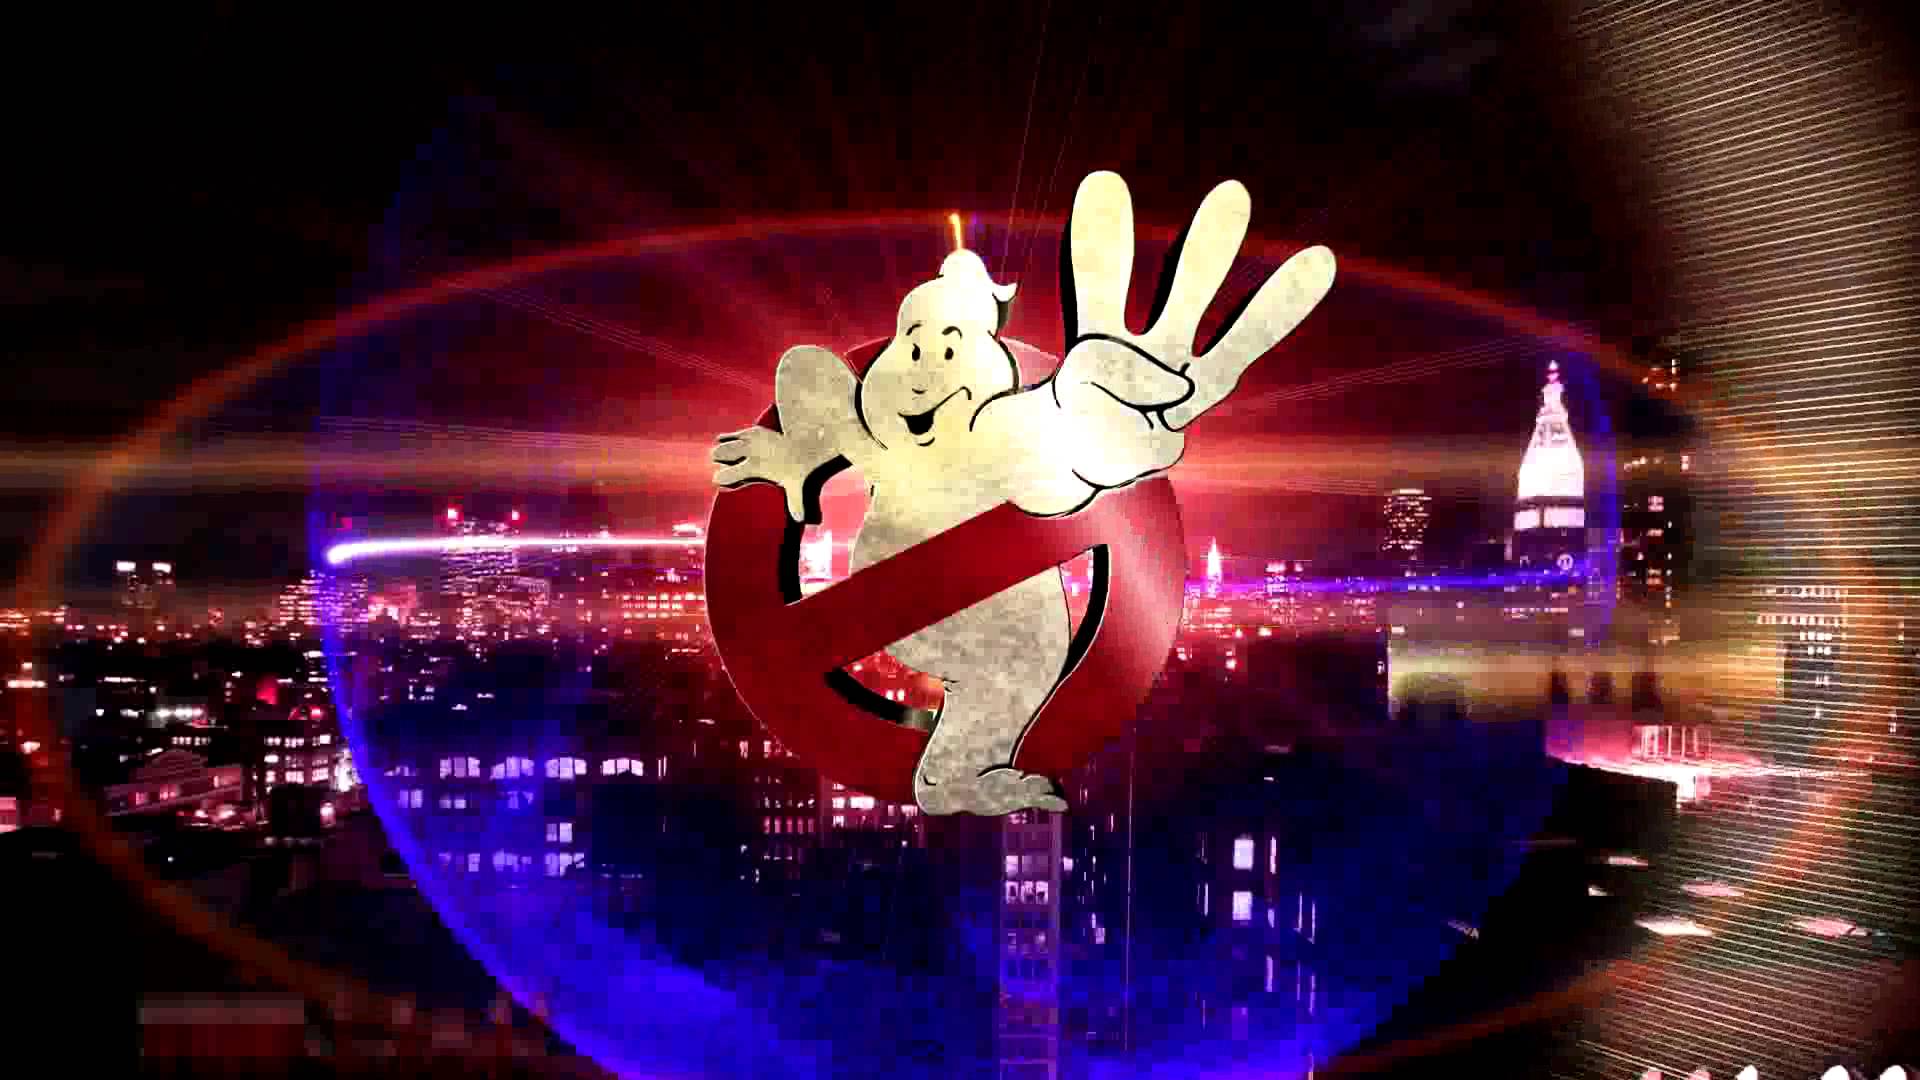 Ghostbusters 3 HD wallpaper free download